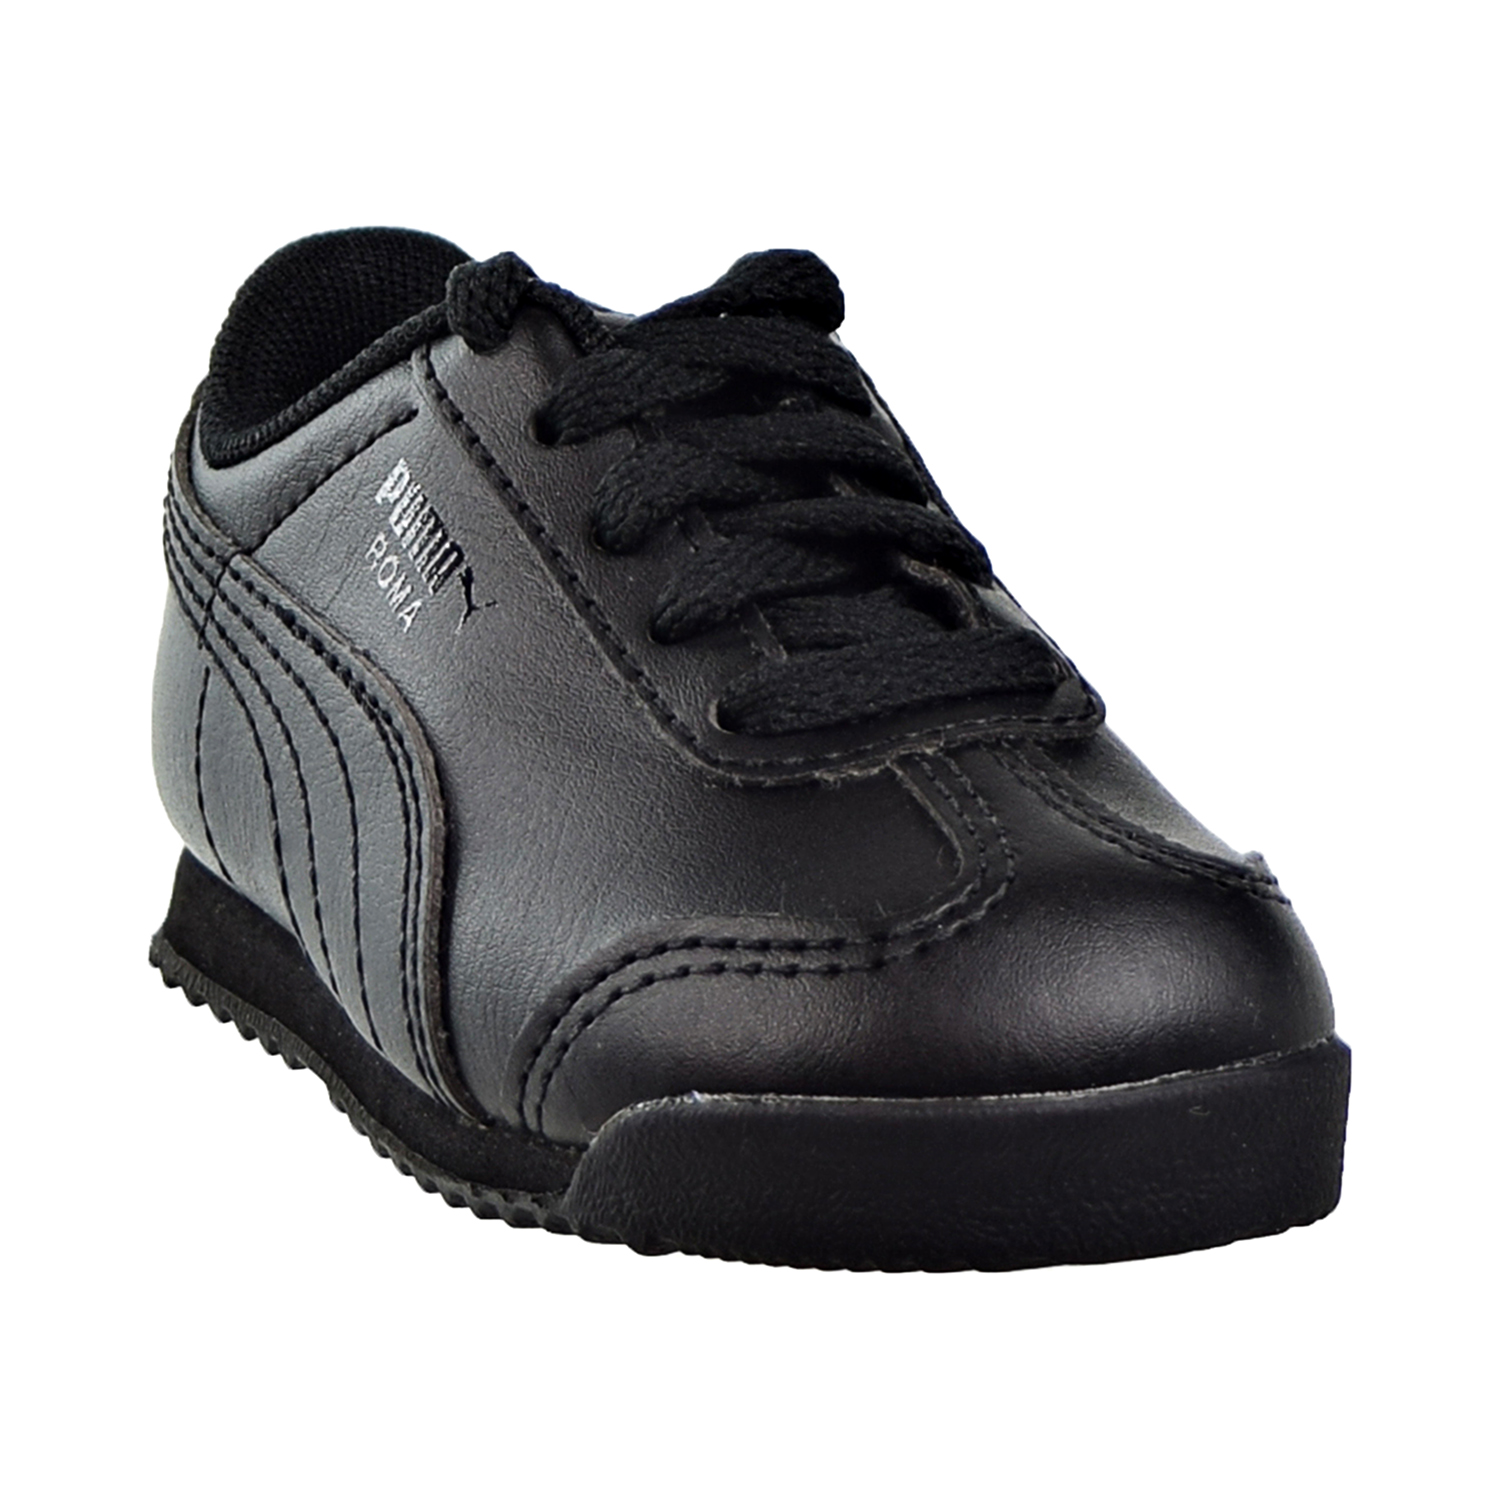 Puma Roma Basic Toddlers-Little Kids Shoes Black 354260-12 | eBay